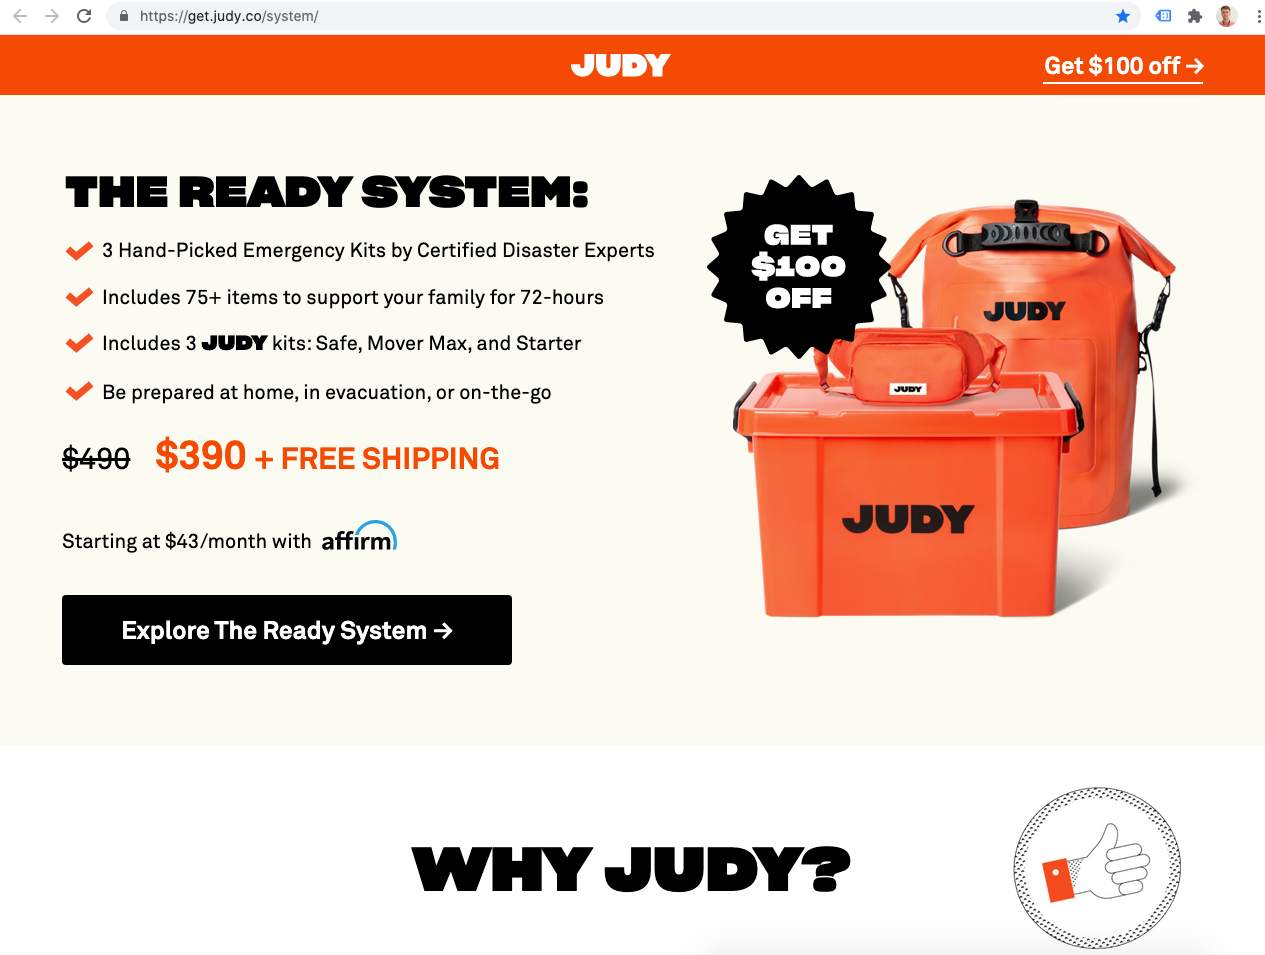 judy-bundle-offer